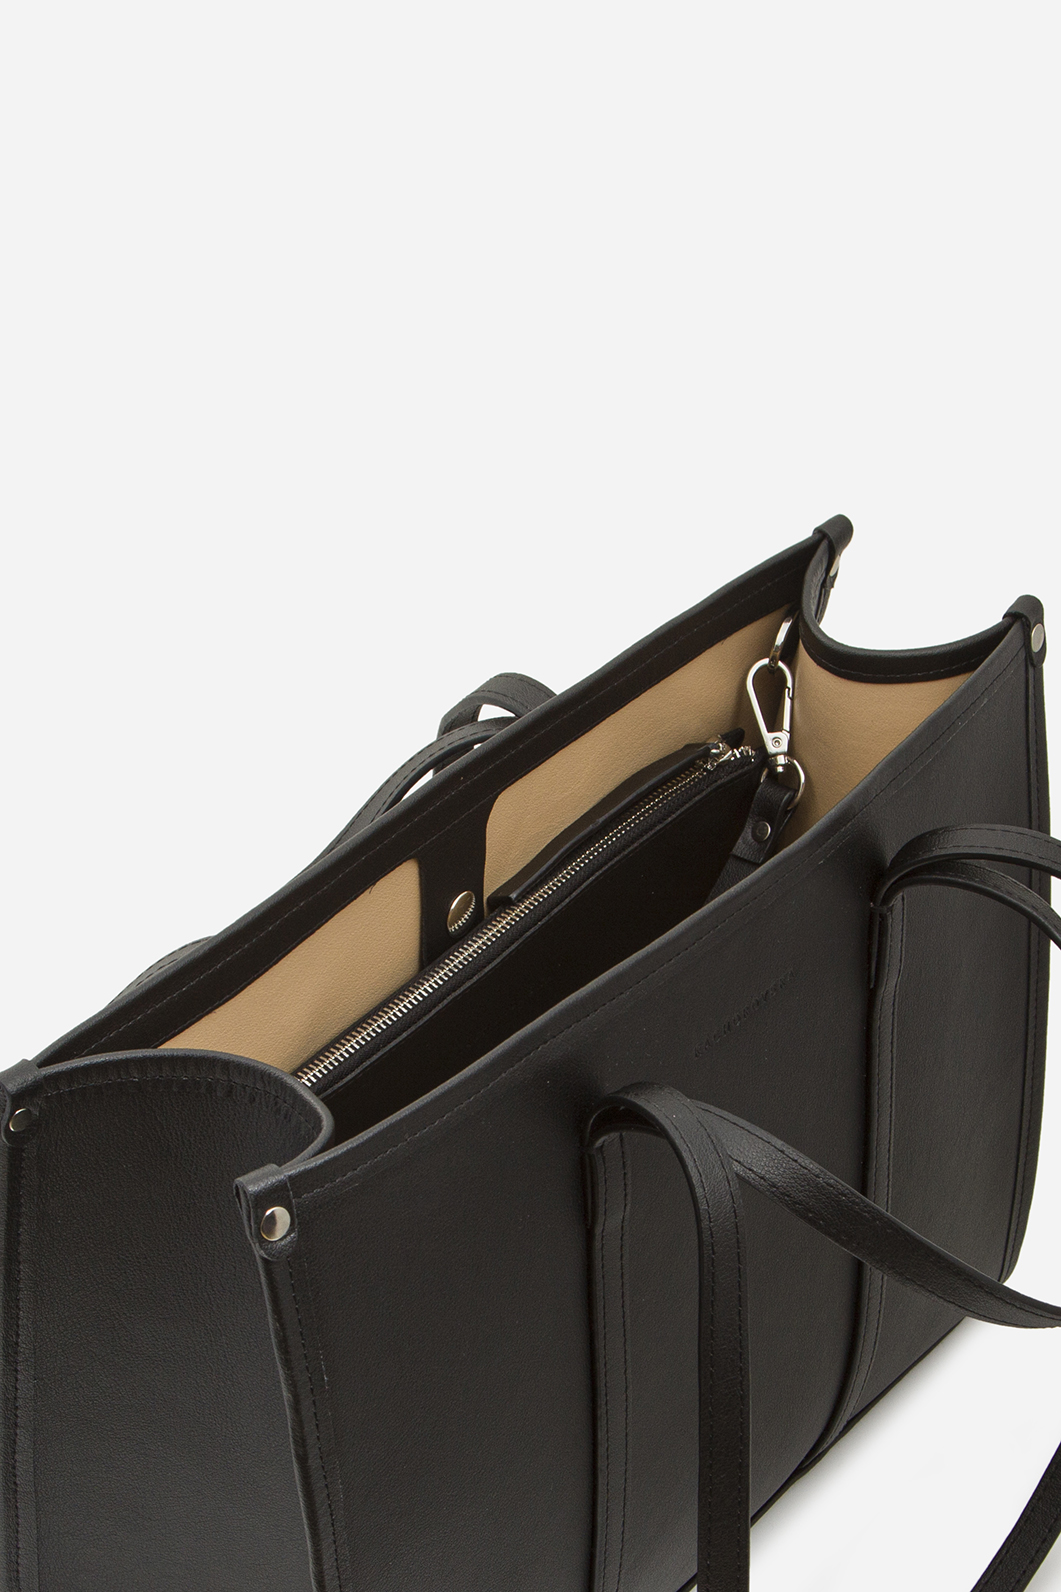 Gina black textured leather
shopper bag /silver/